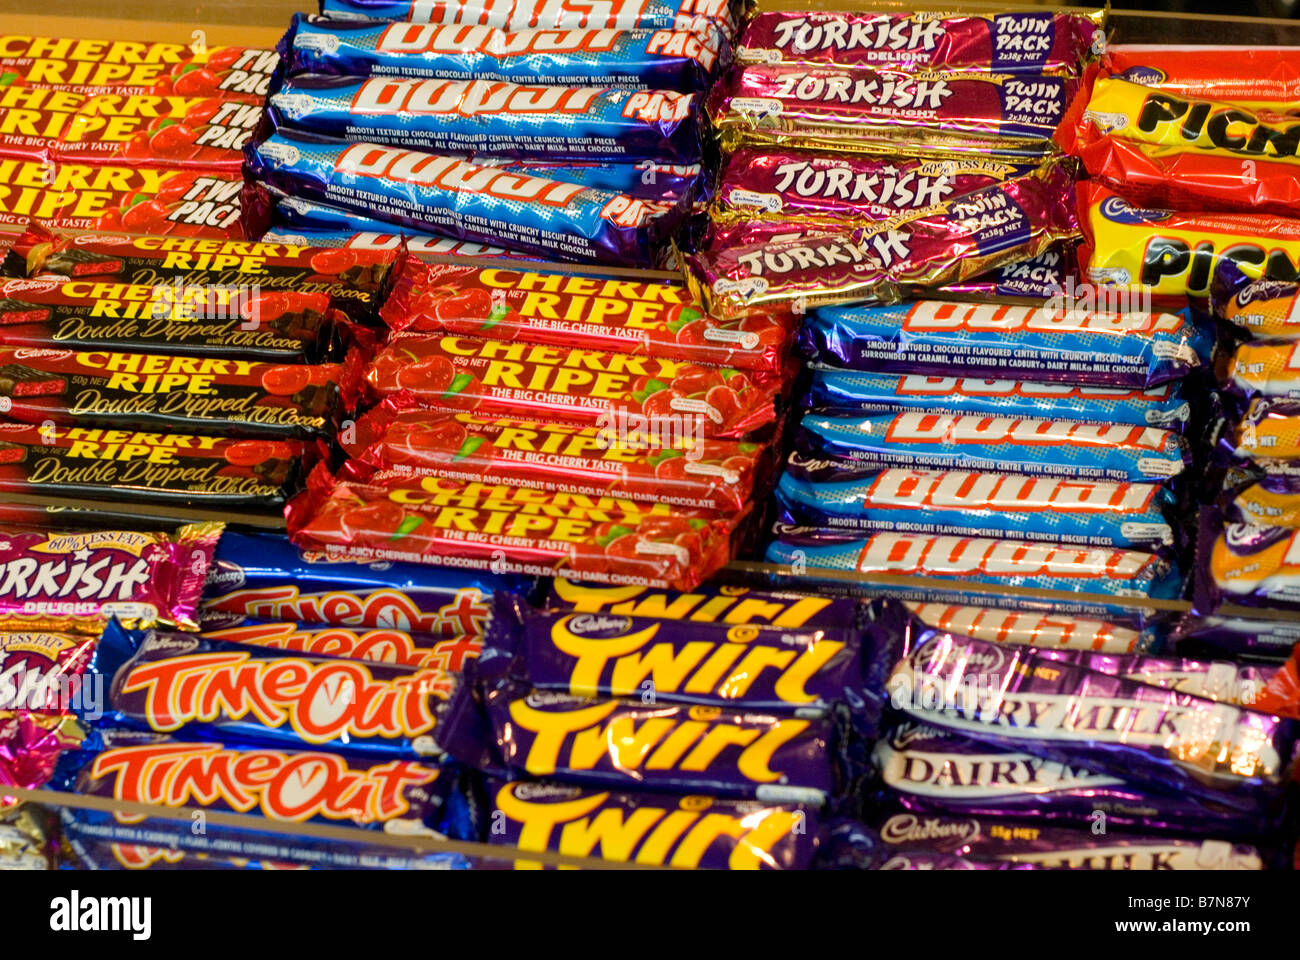 chocolate bars on display Stock Photo